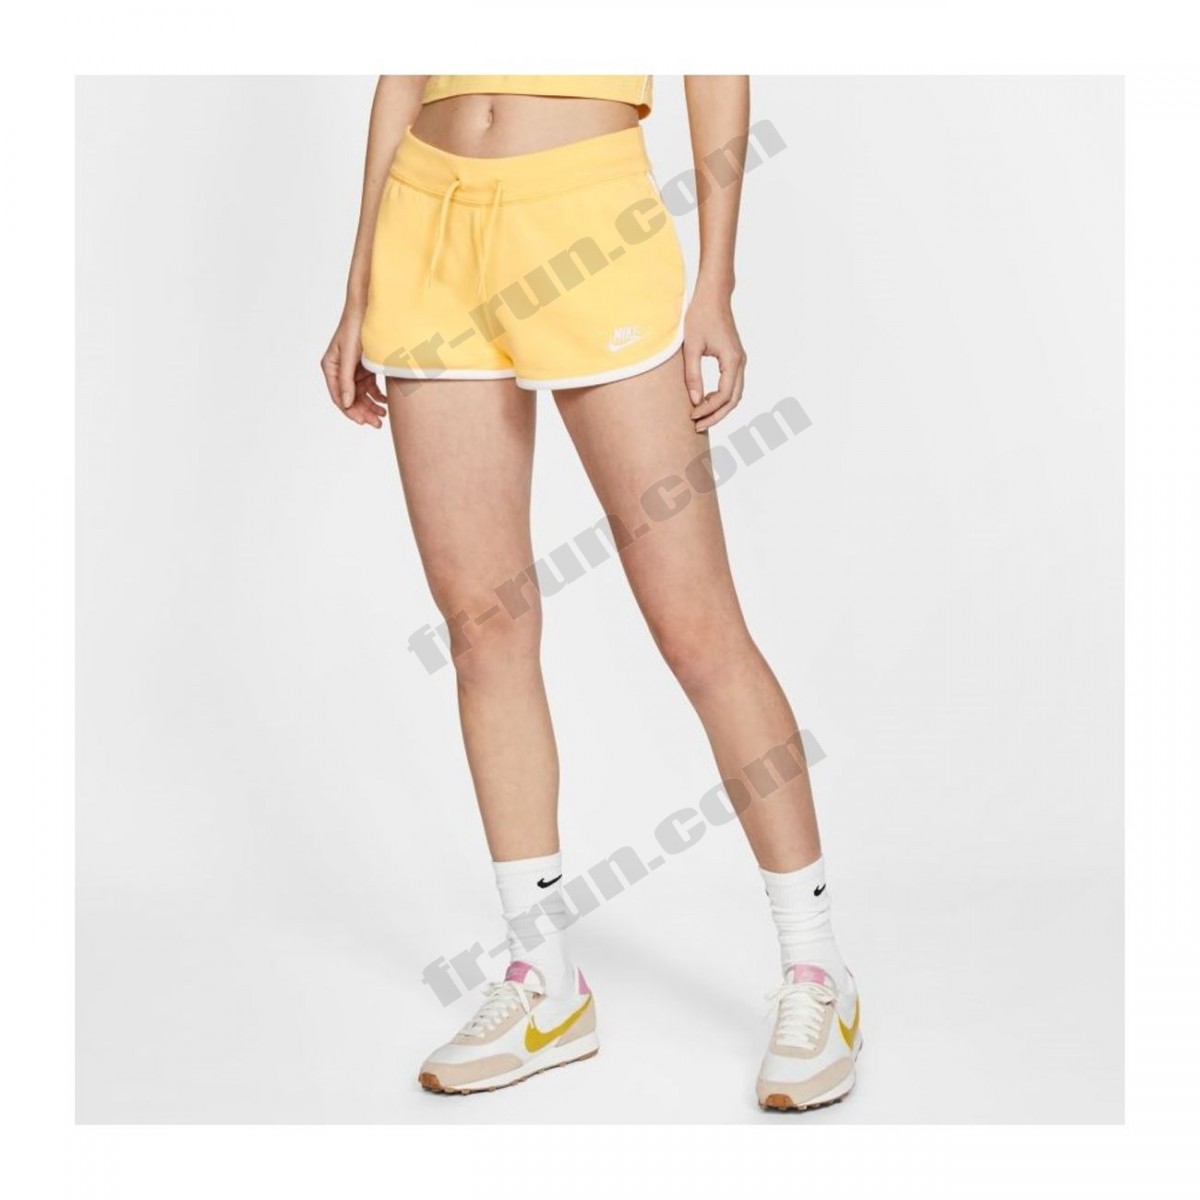 Nike/running femme NIKE Nike Sportswear Heritage √ Nouveau style √ Soldes - -3